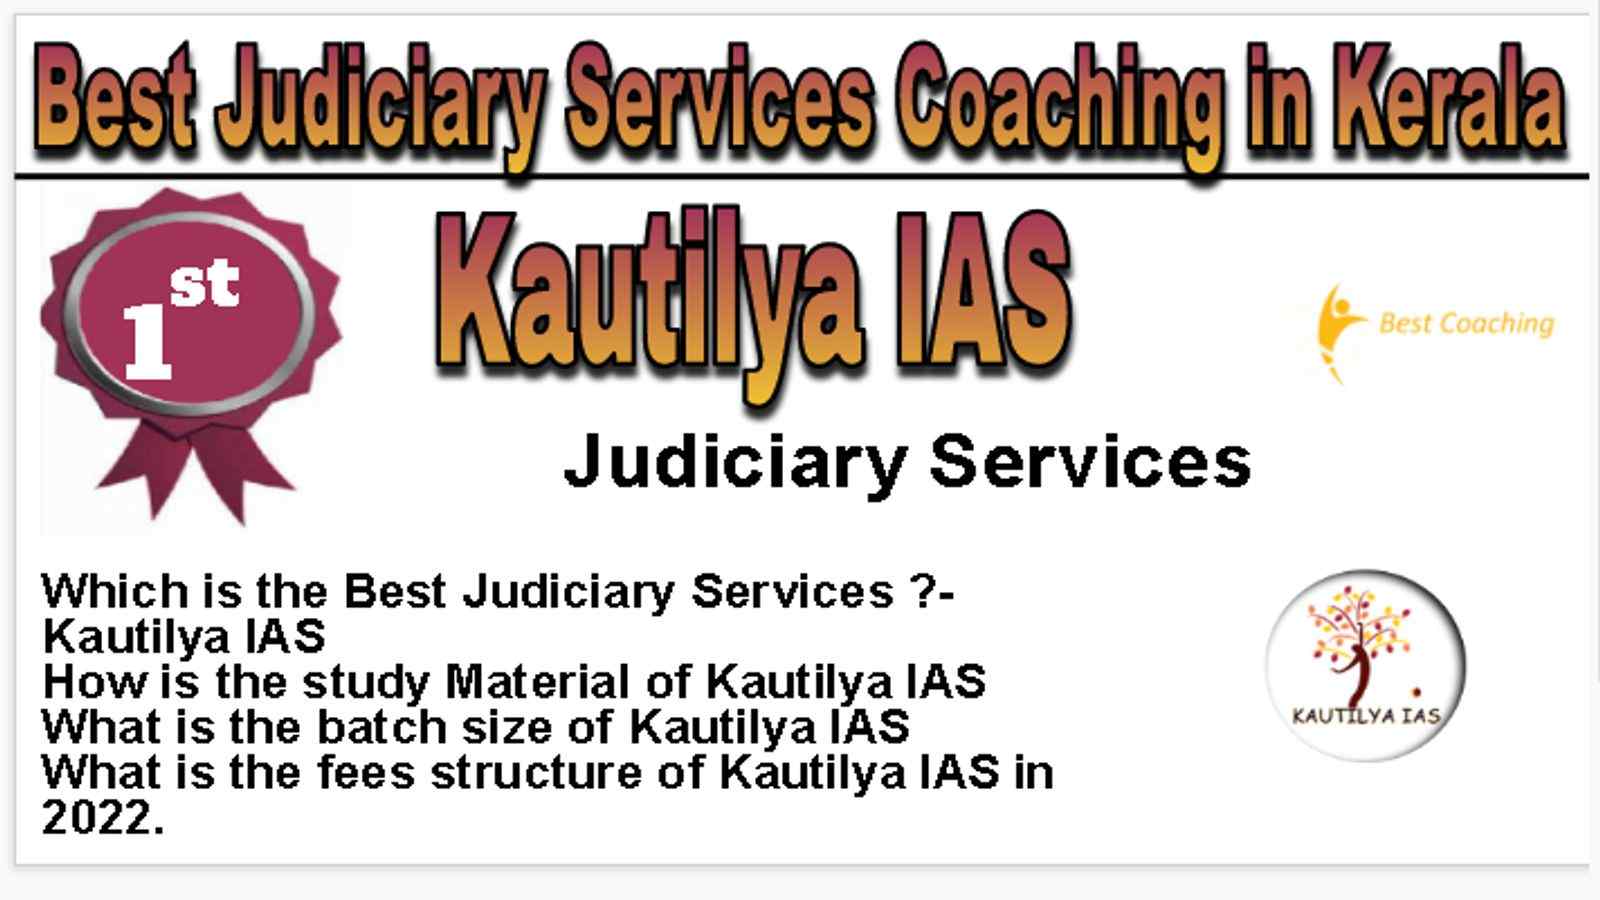 Rank 1 Best Judiciary Services Coaching in Kerala